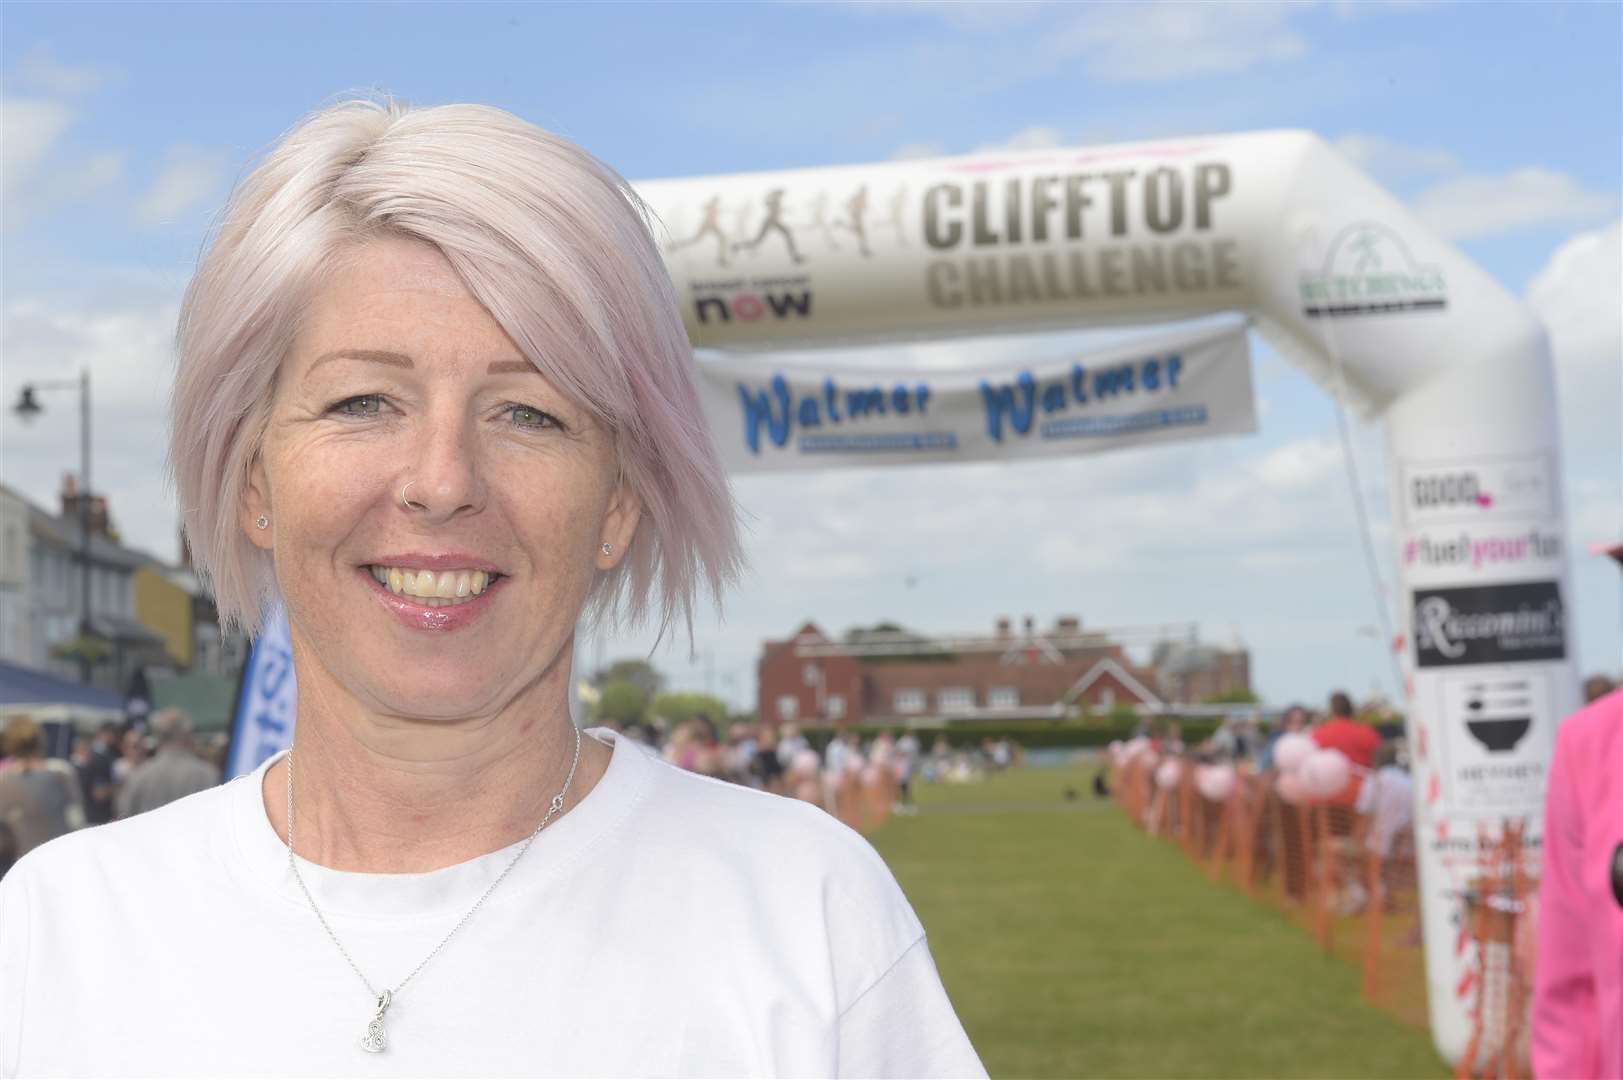 Chantele Rashbrook has raised thousands through her annual Clifftop Challenge